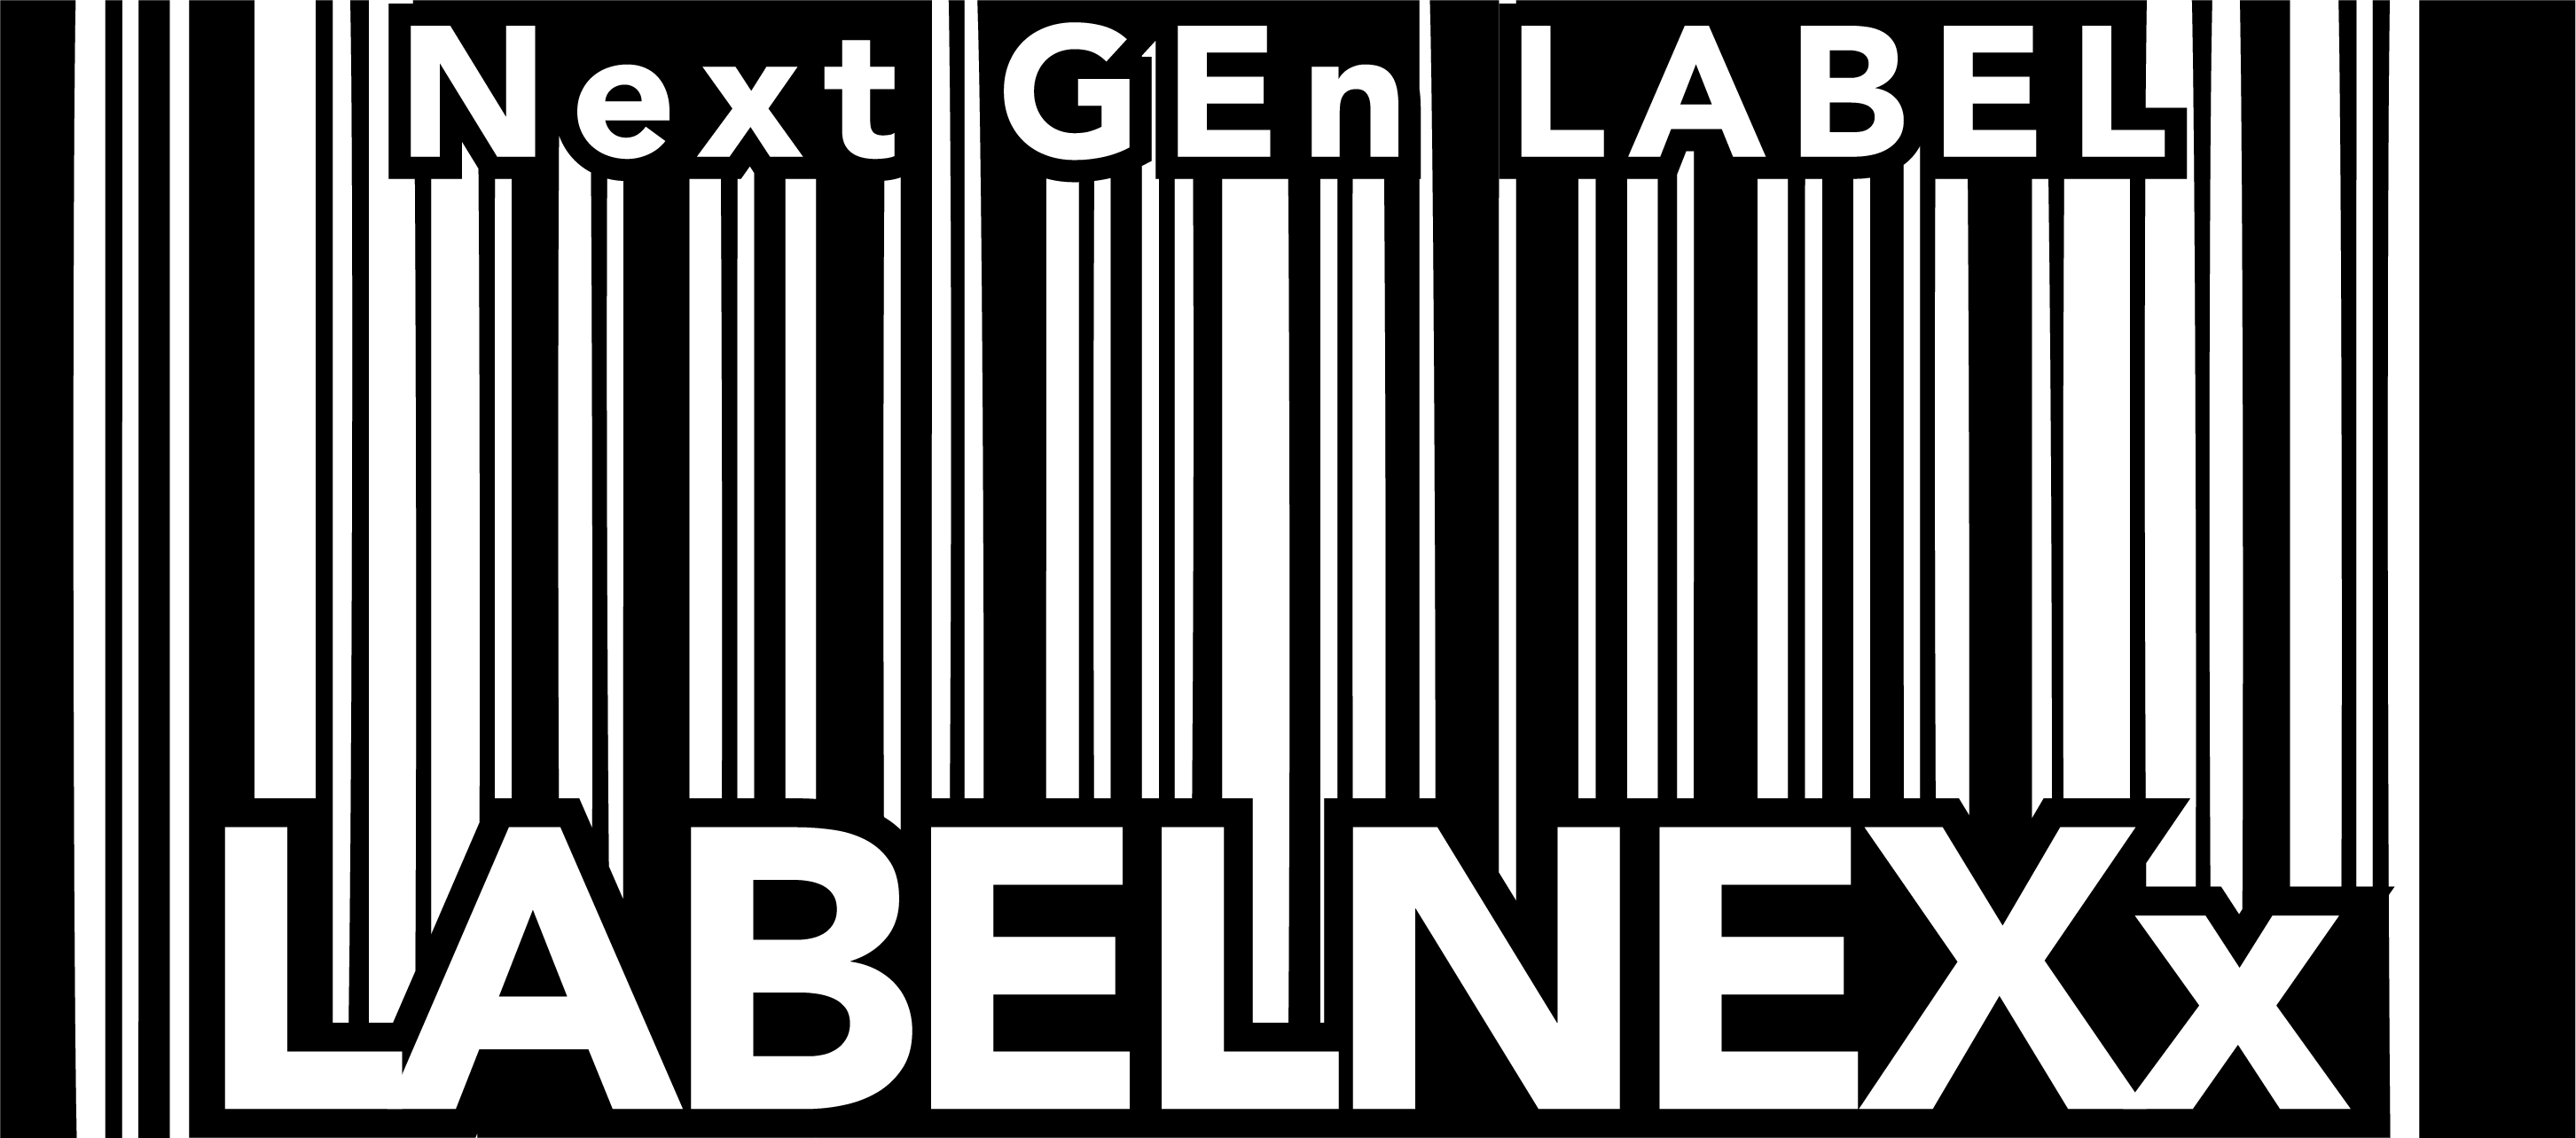 Labelnexx Best Barcode Label Design and Printing